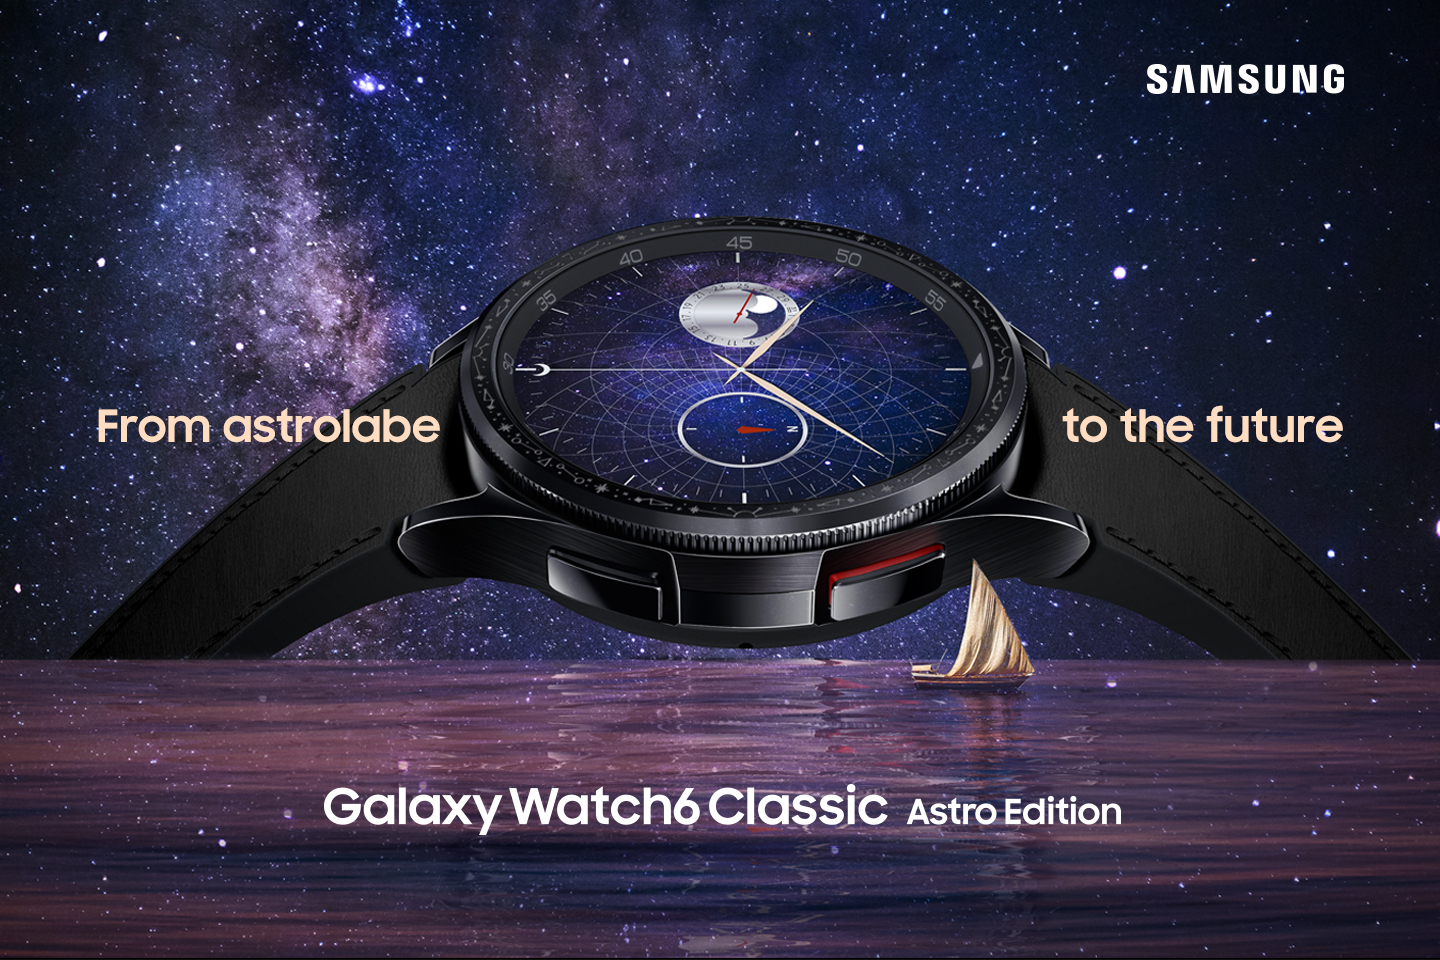 Galaxy Watch6 Astro Newsbody